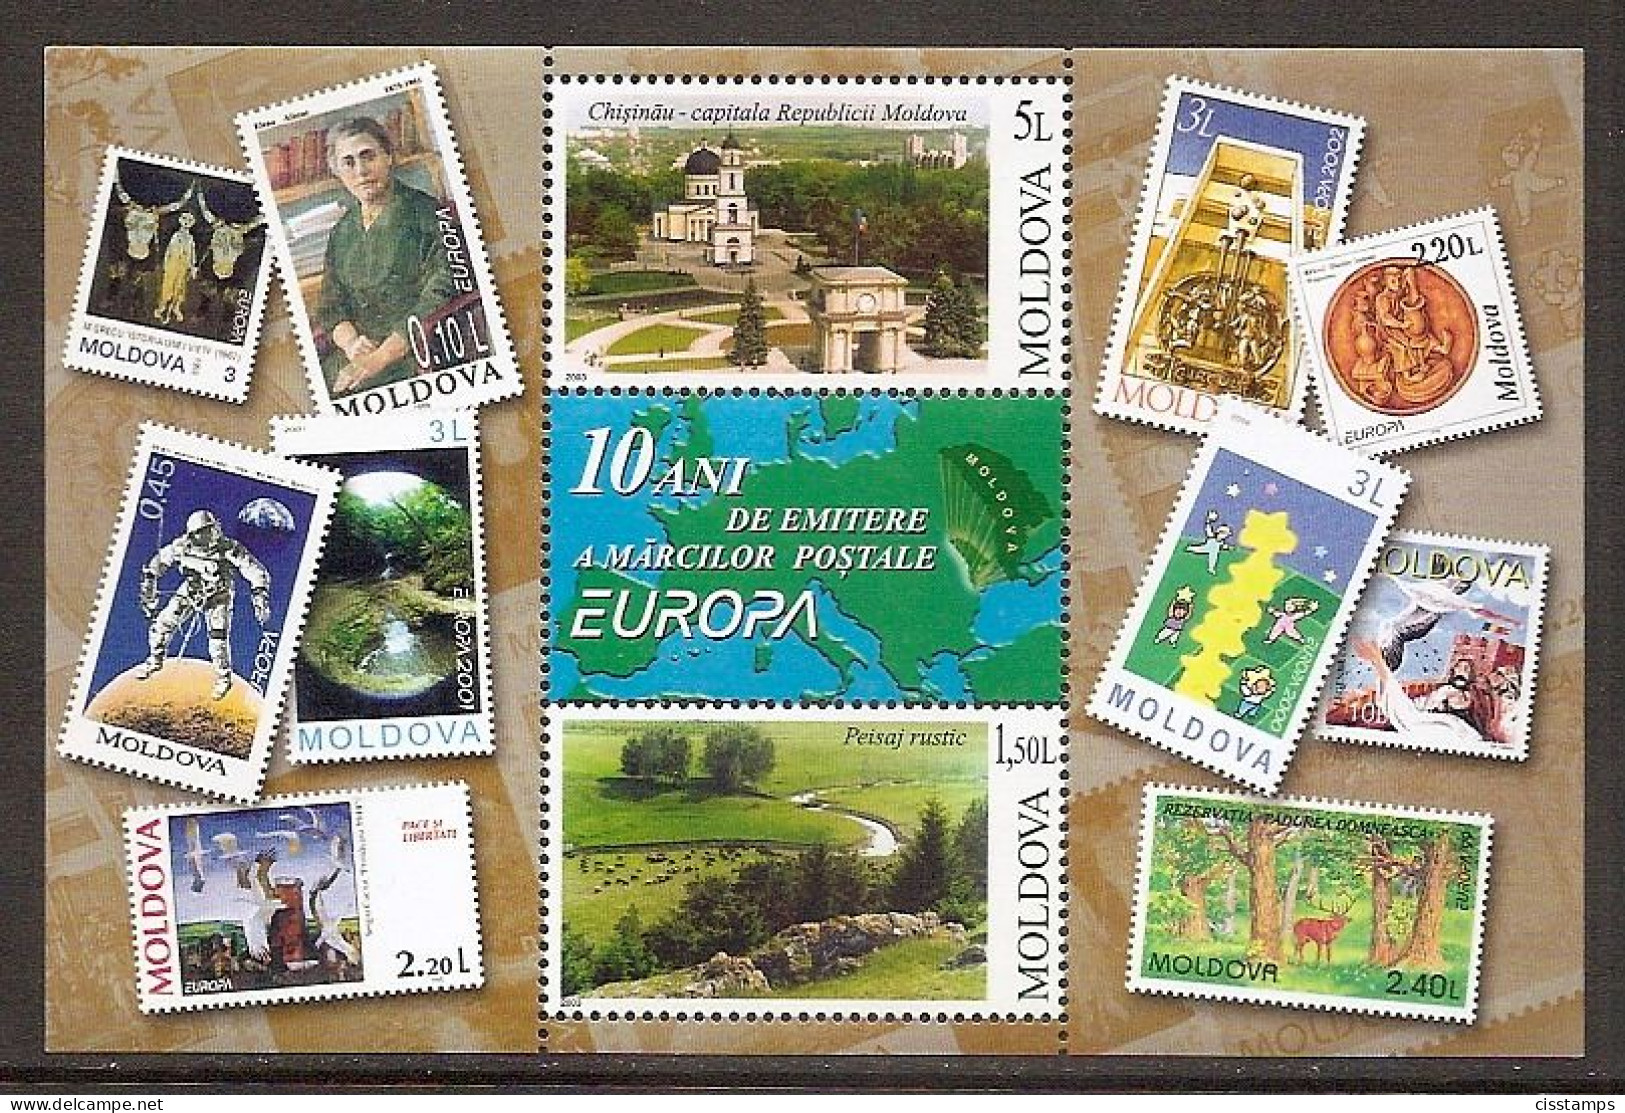 MOLDOVA 2003●10th Anniversary Moldavian EUROPA Issues●Stamp On Stamp /MiBl 29 MNH - 2003